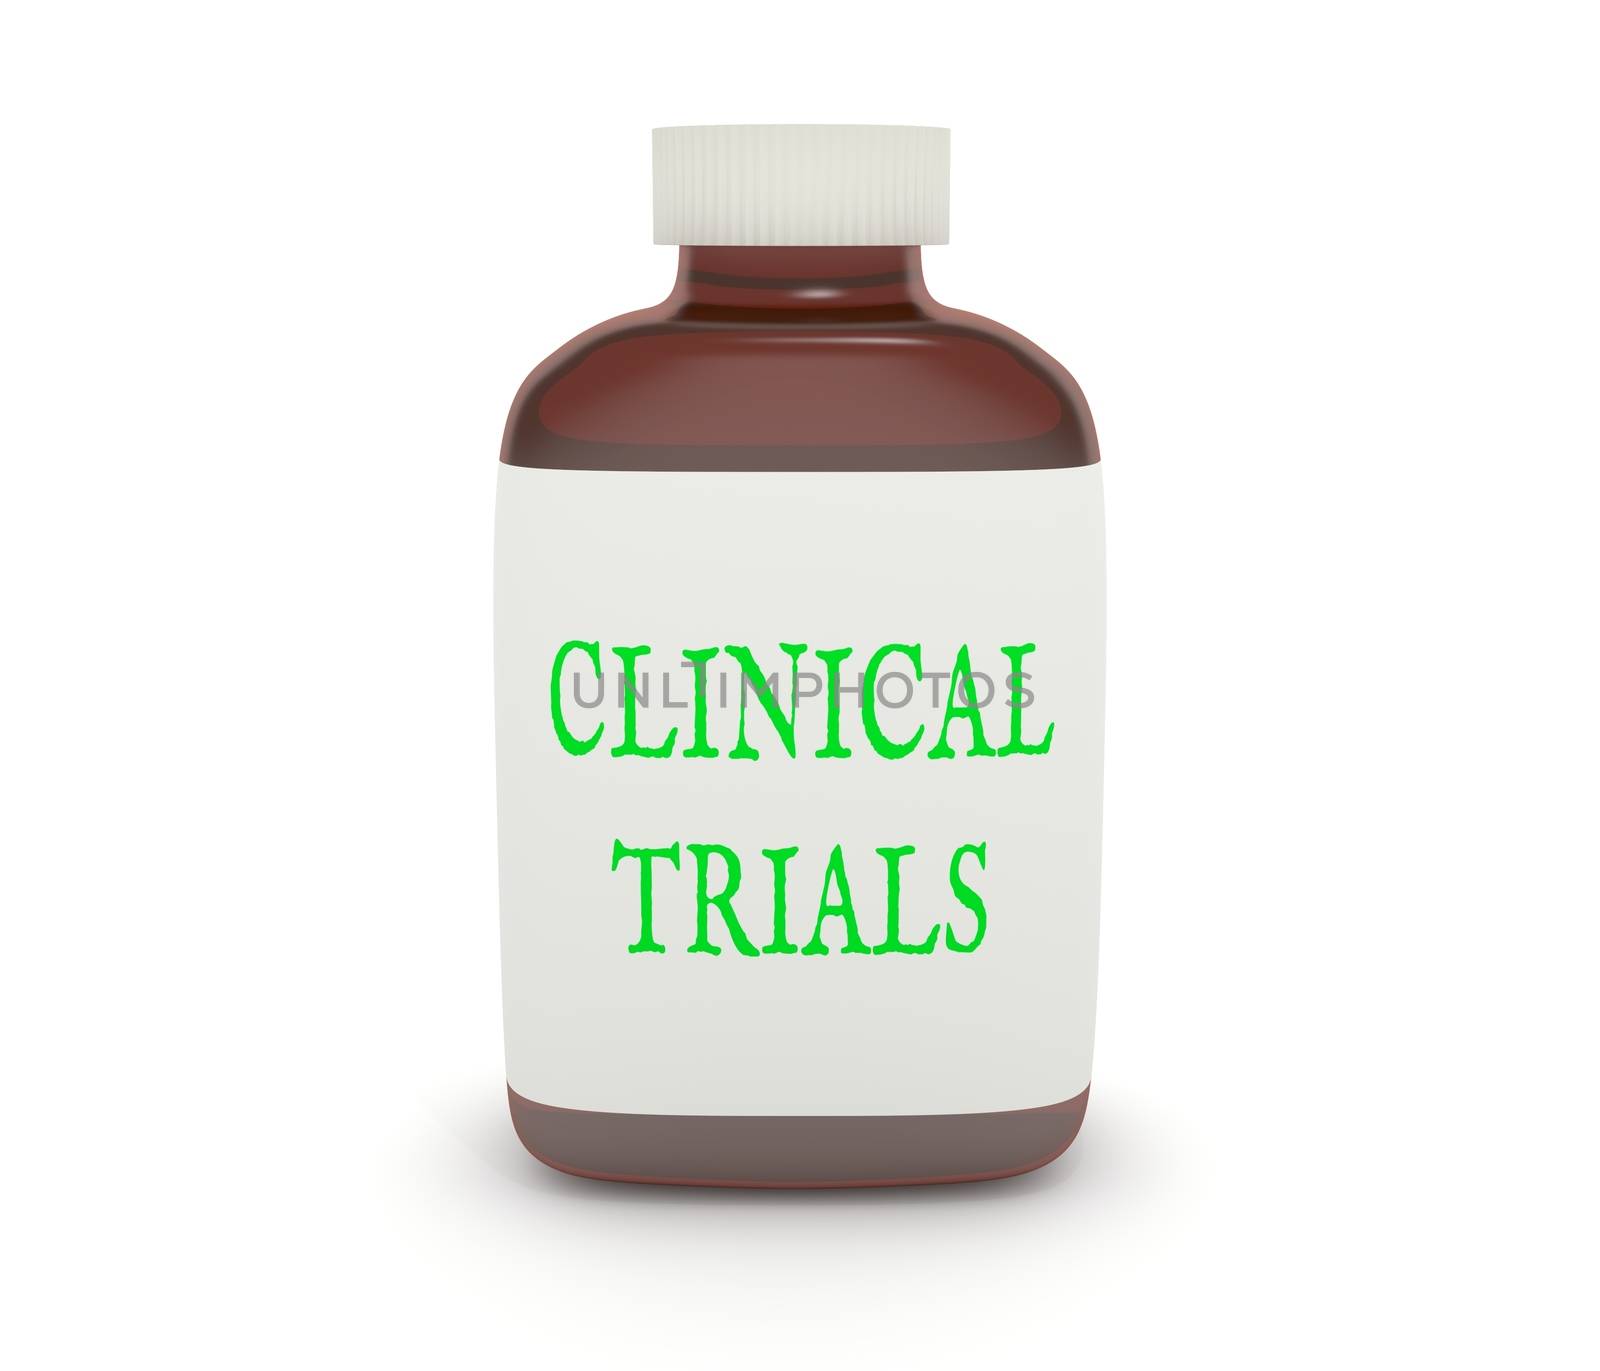 Clinical Trials by darrenwhittingham